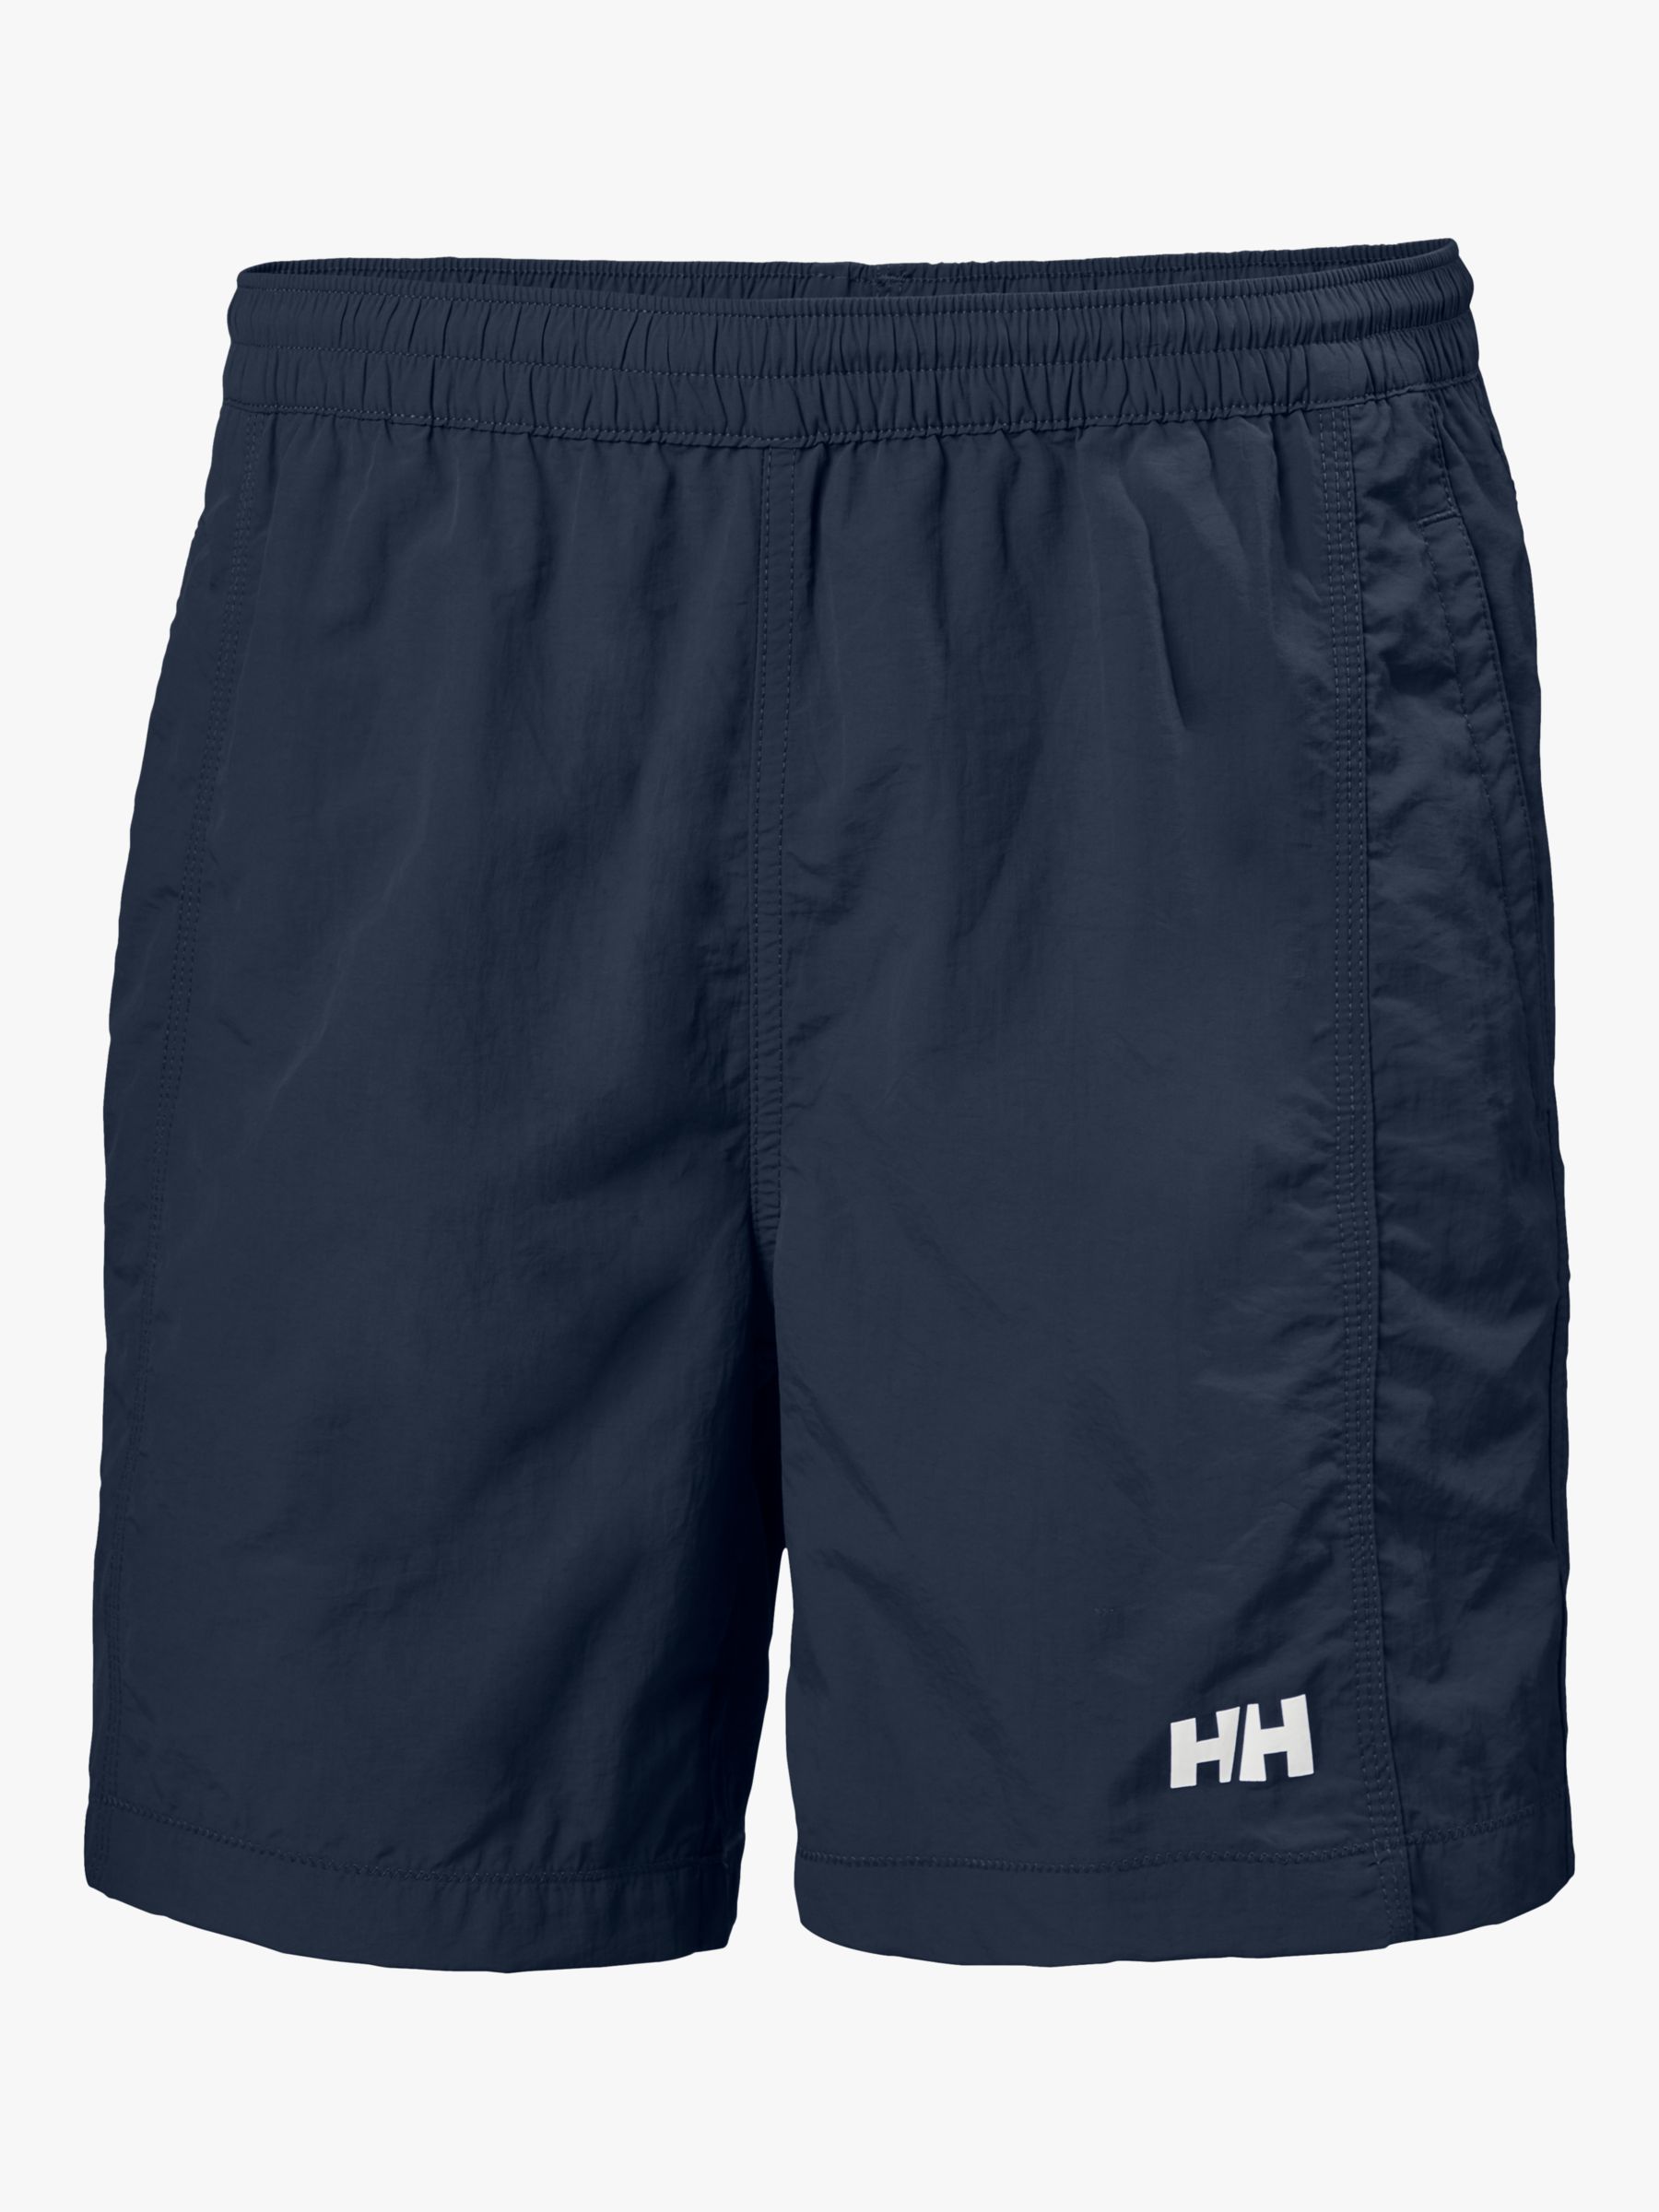 Helly Hansen Men's Swim Shorts, Navy, S